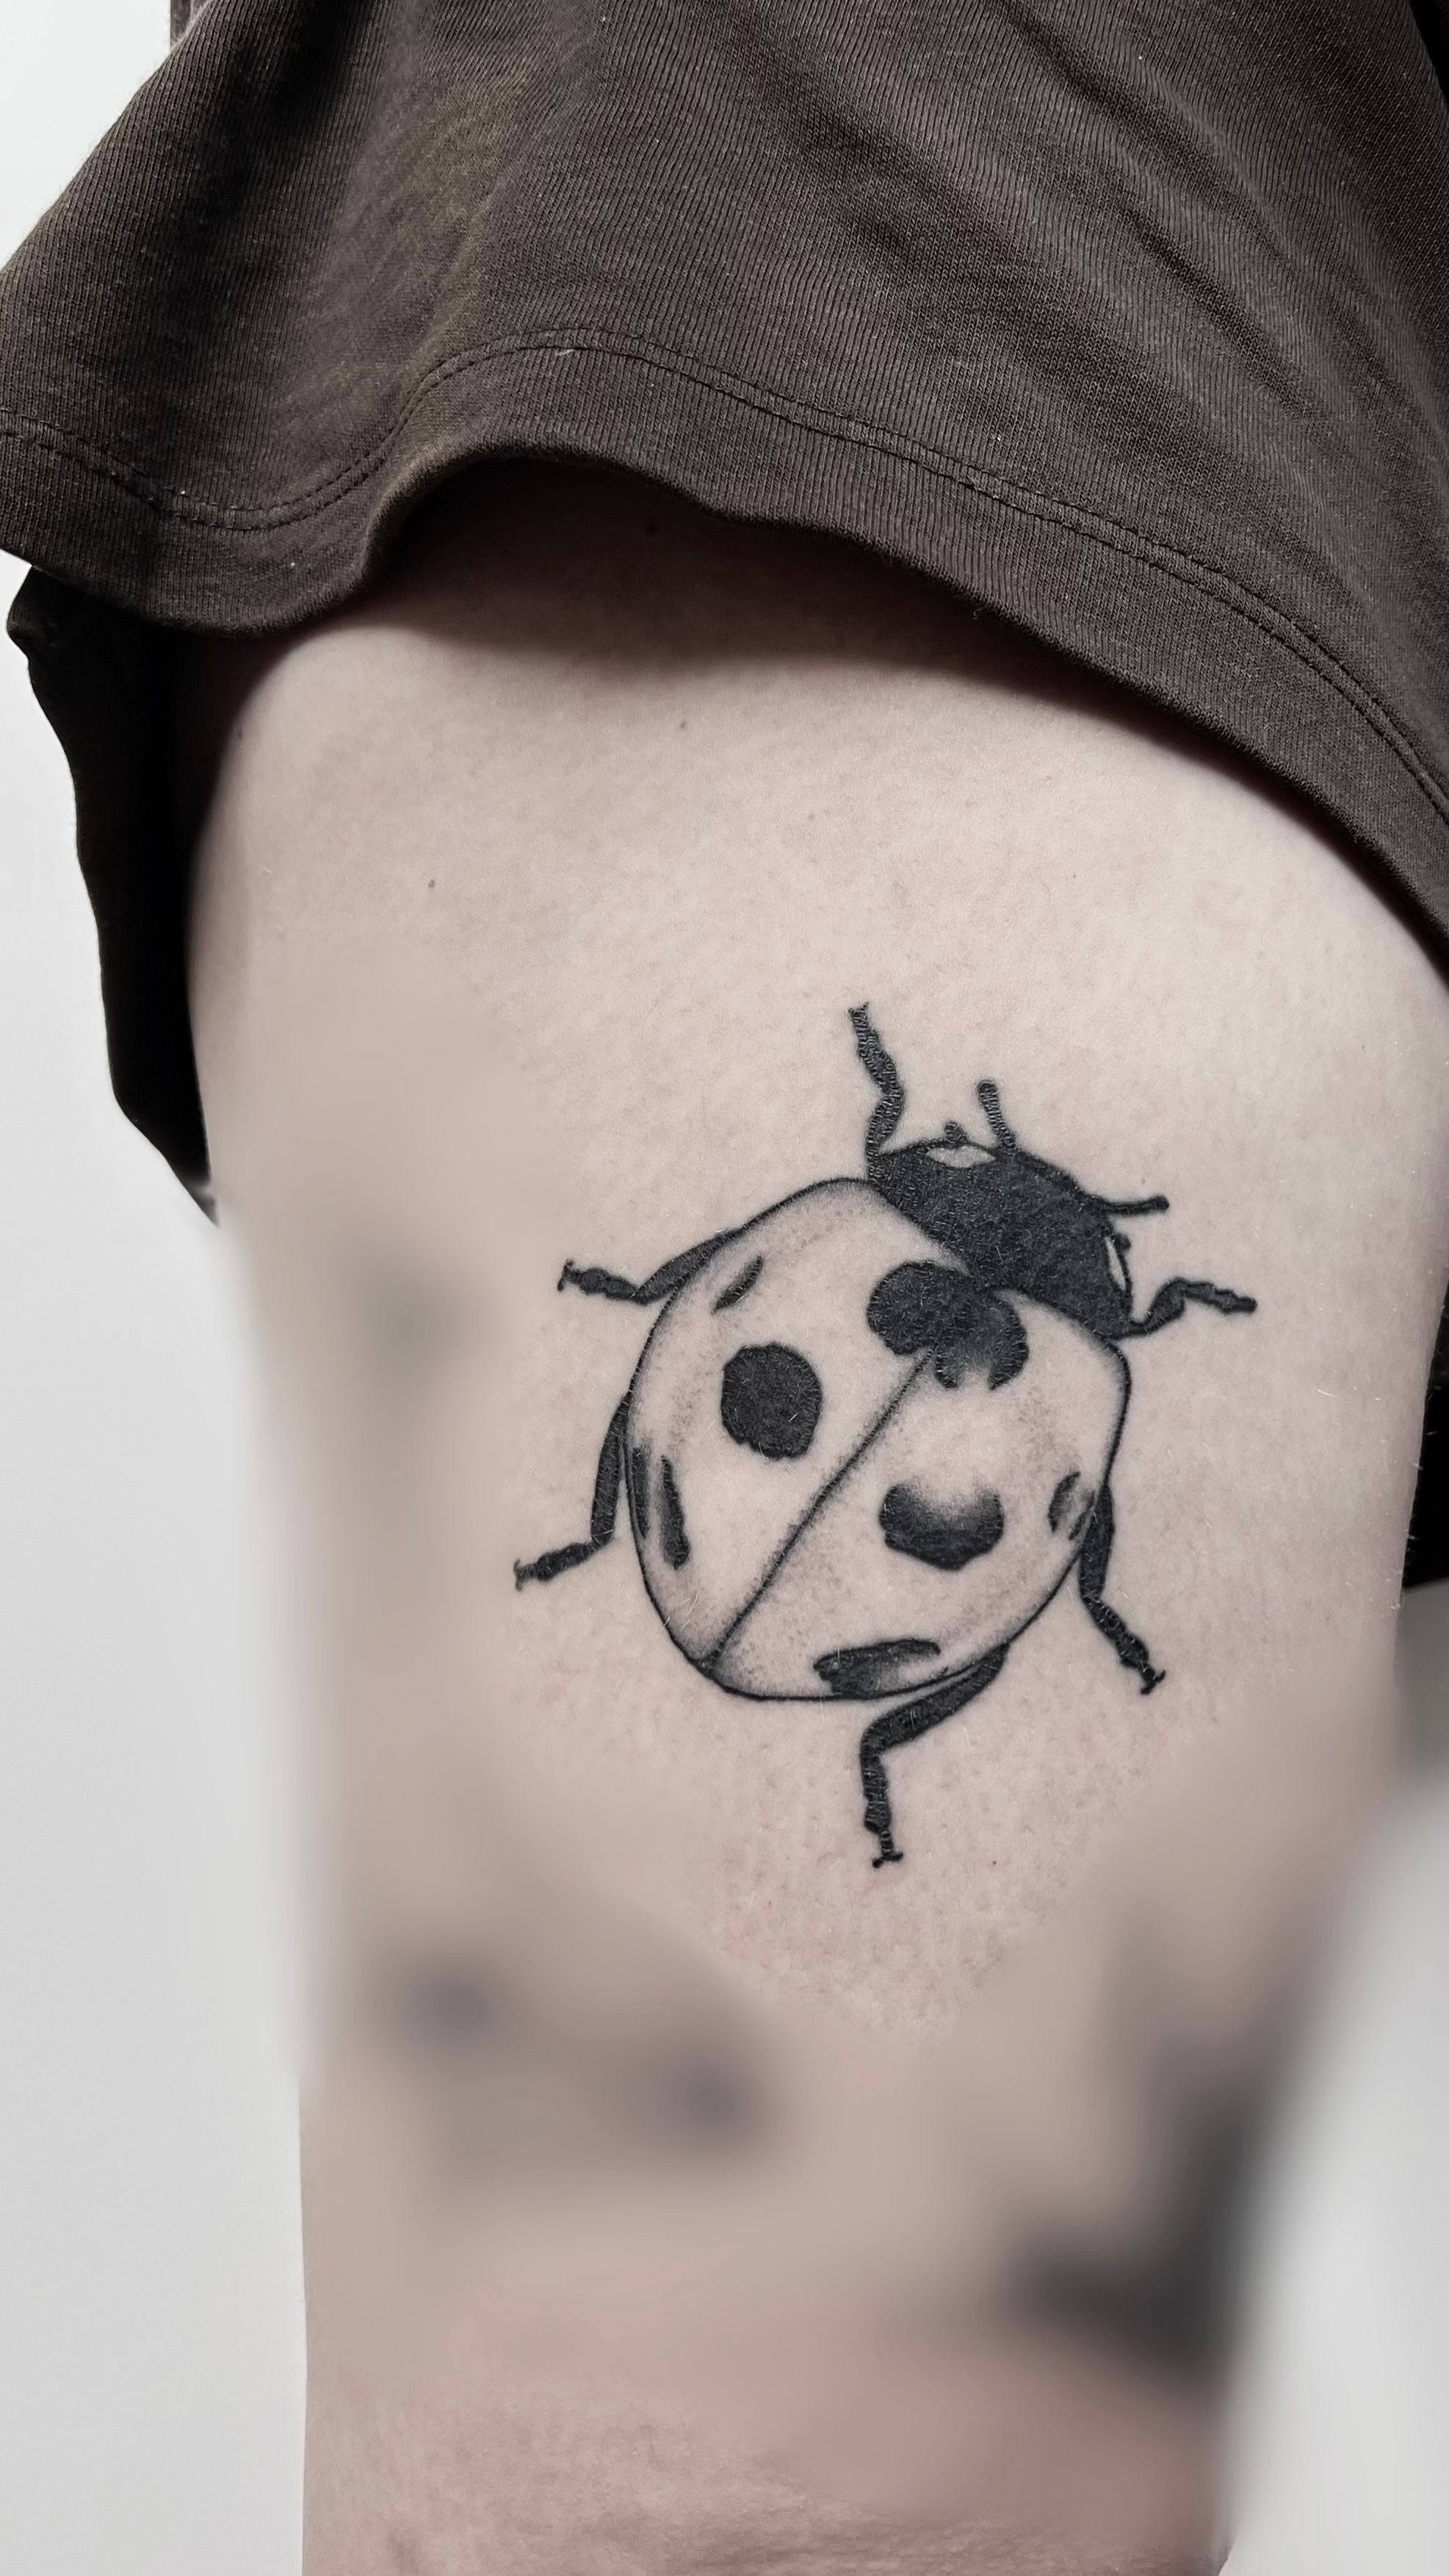 Buy Vintage Ladybug Temporary Tattoos set of 6 Online in India  Etsy